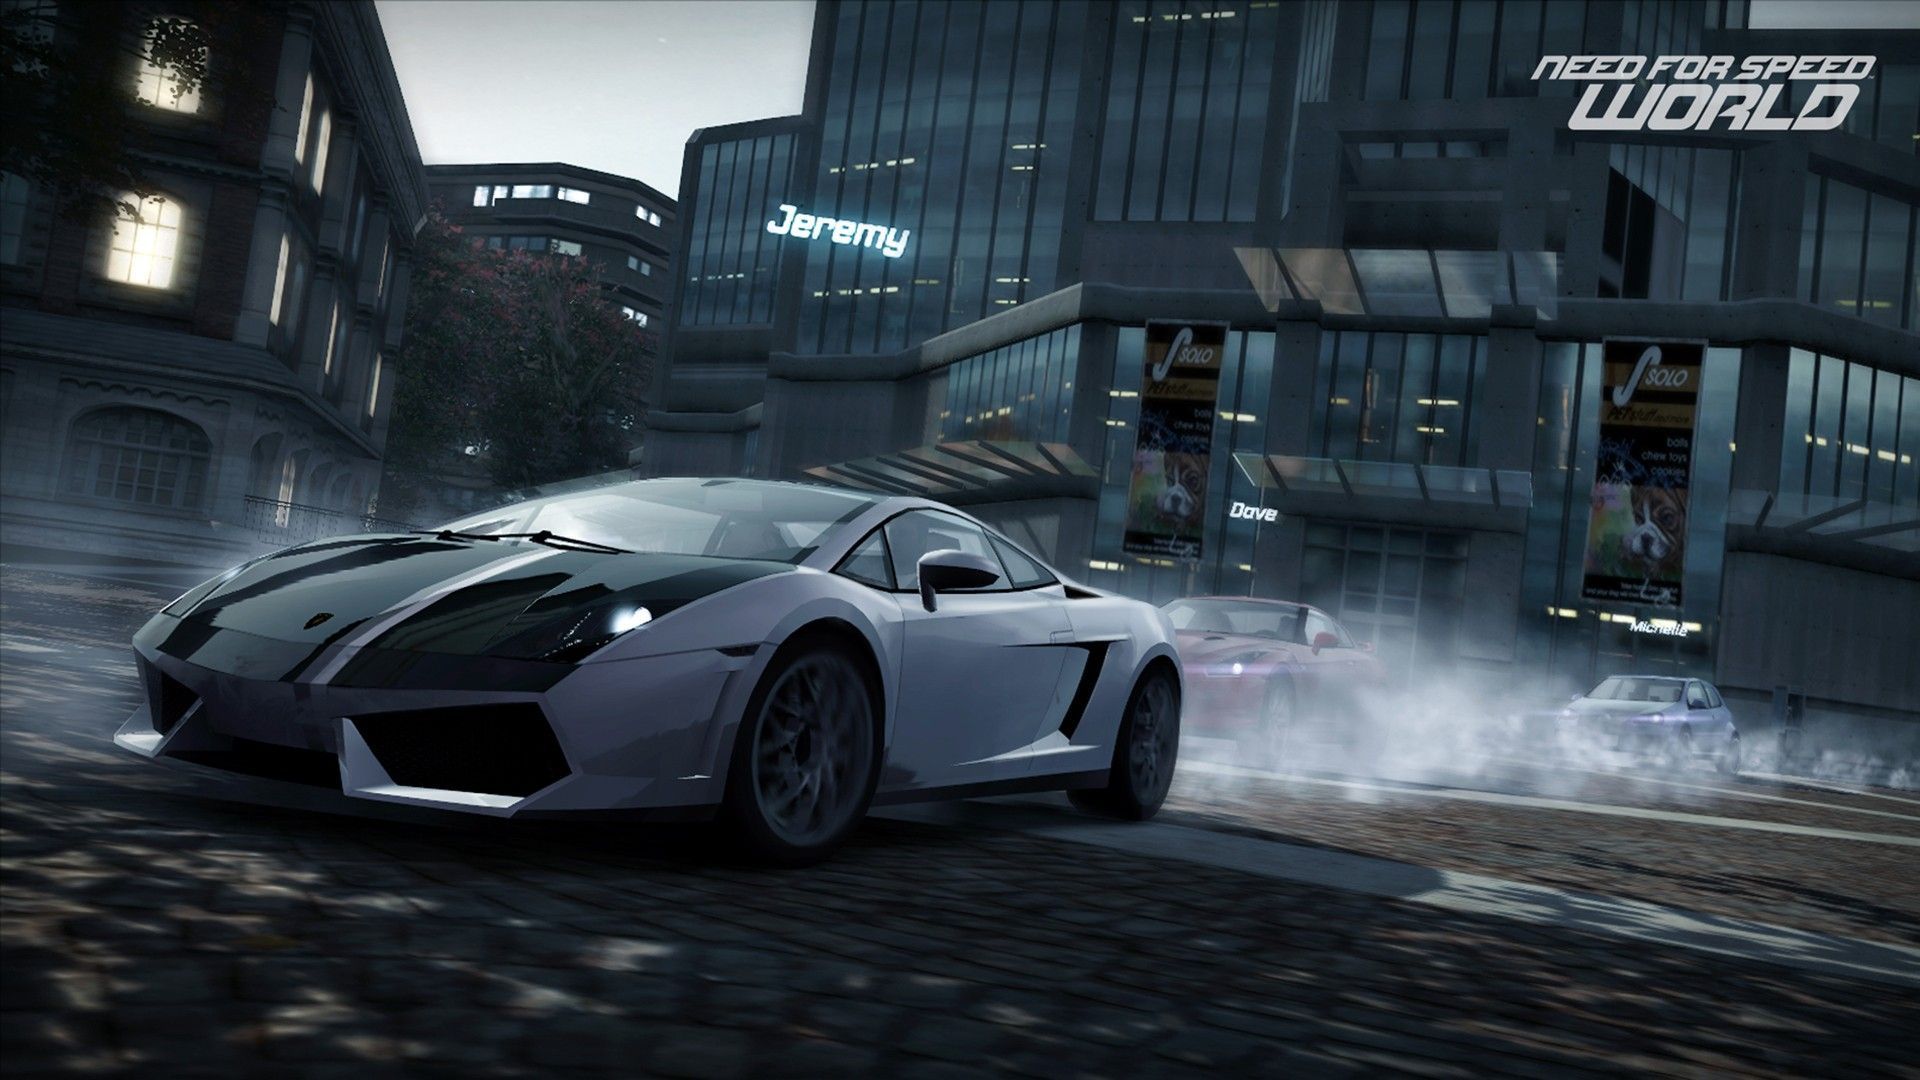 Video games cars Lamborghini Gallardo Need for Speed World games ...